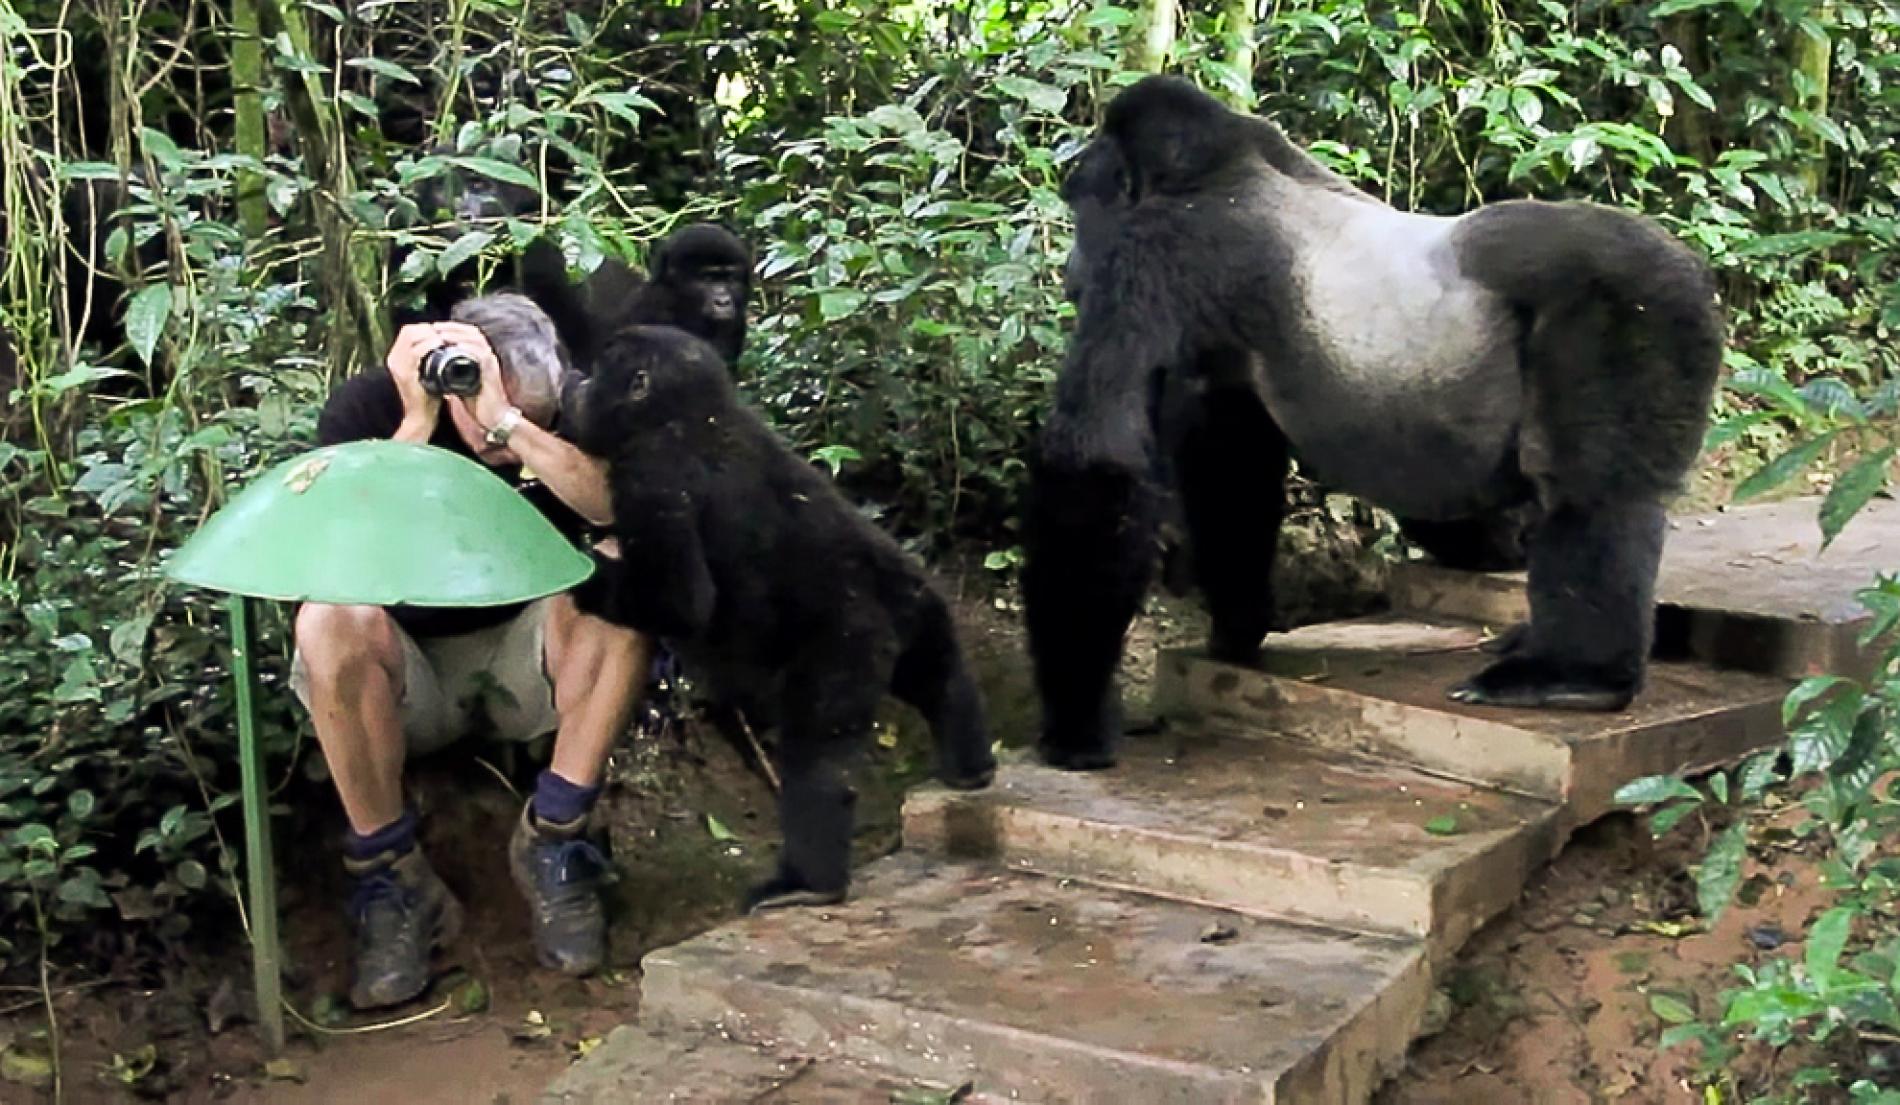 Wild Gorillas Groom U.S. Tourist in Uganda